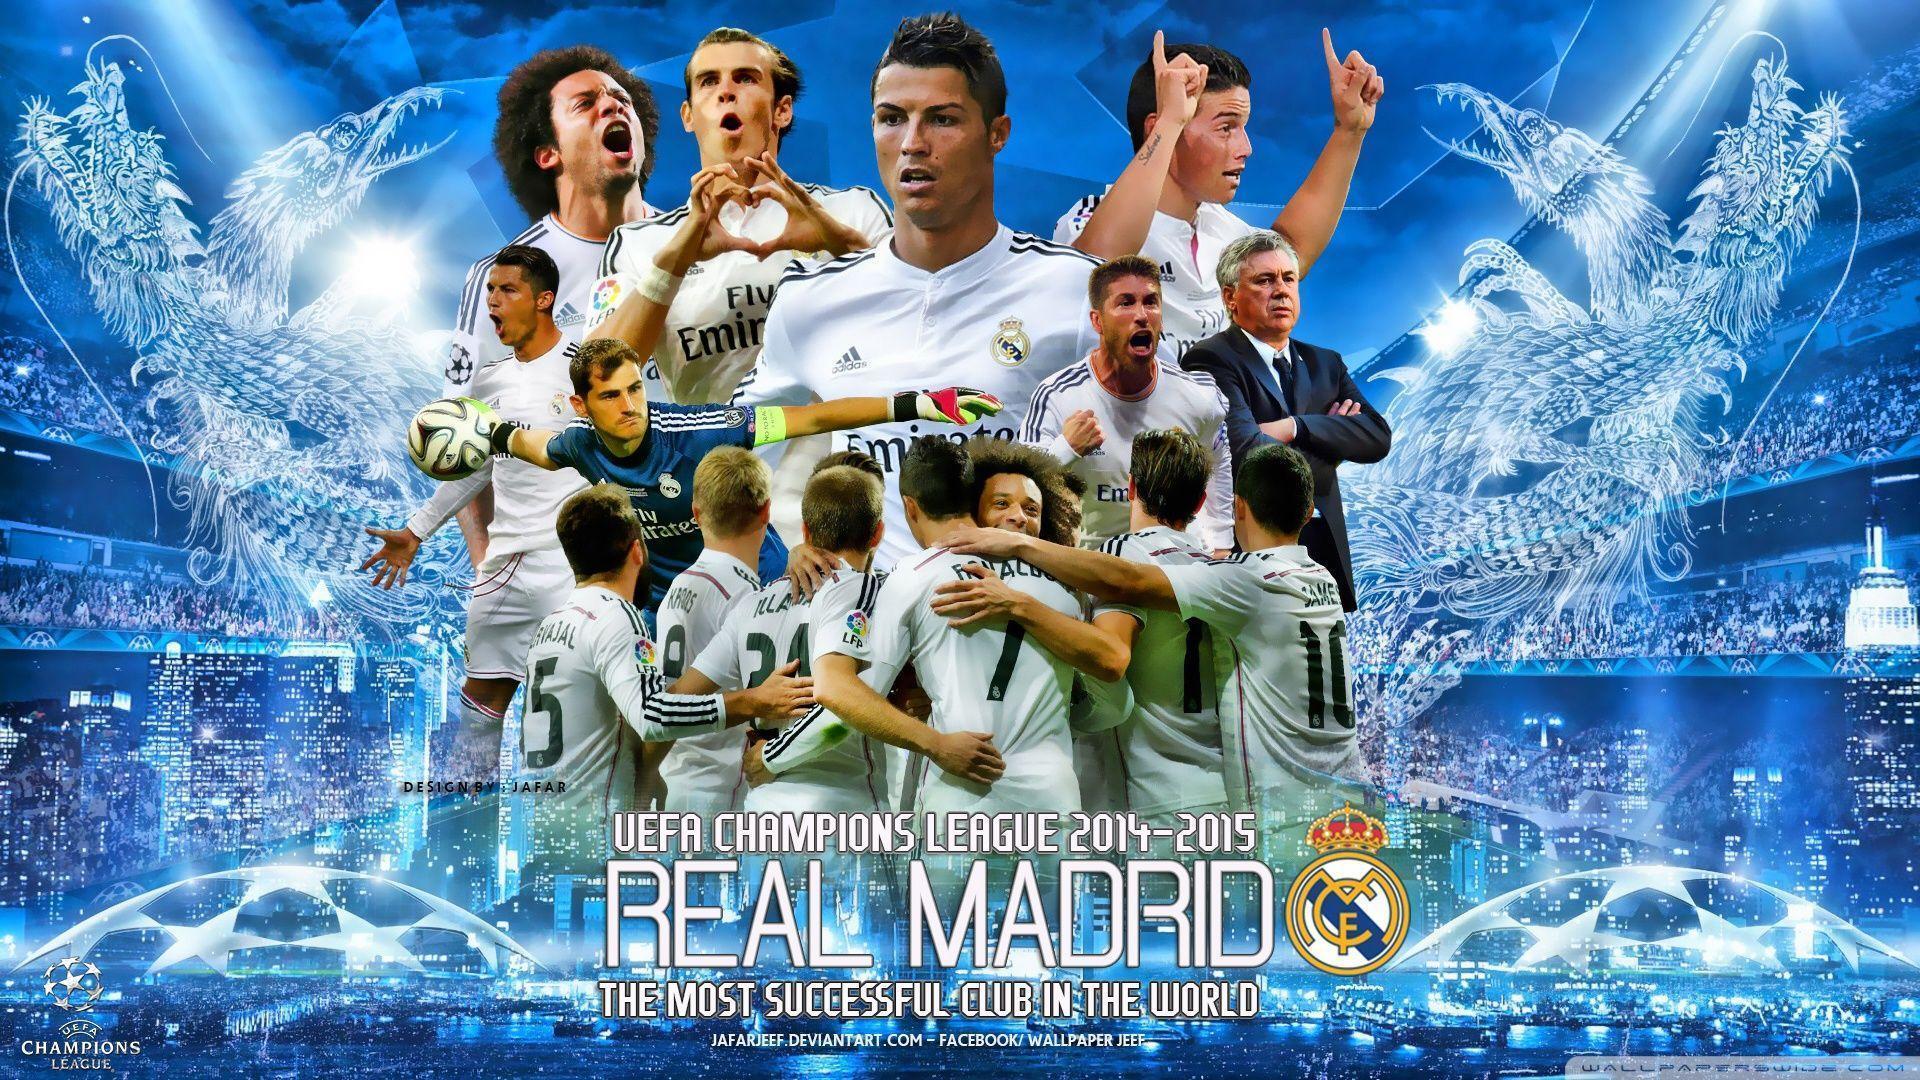 REAL MADRID CHAMPIONS LEAGUE HD desktop wallpaper, High